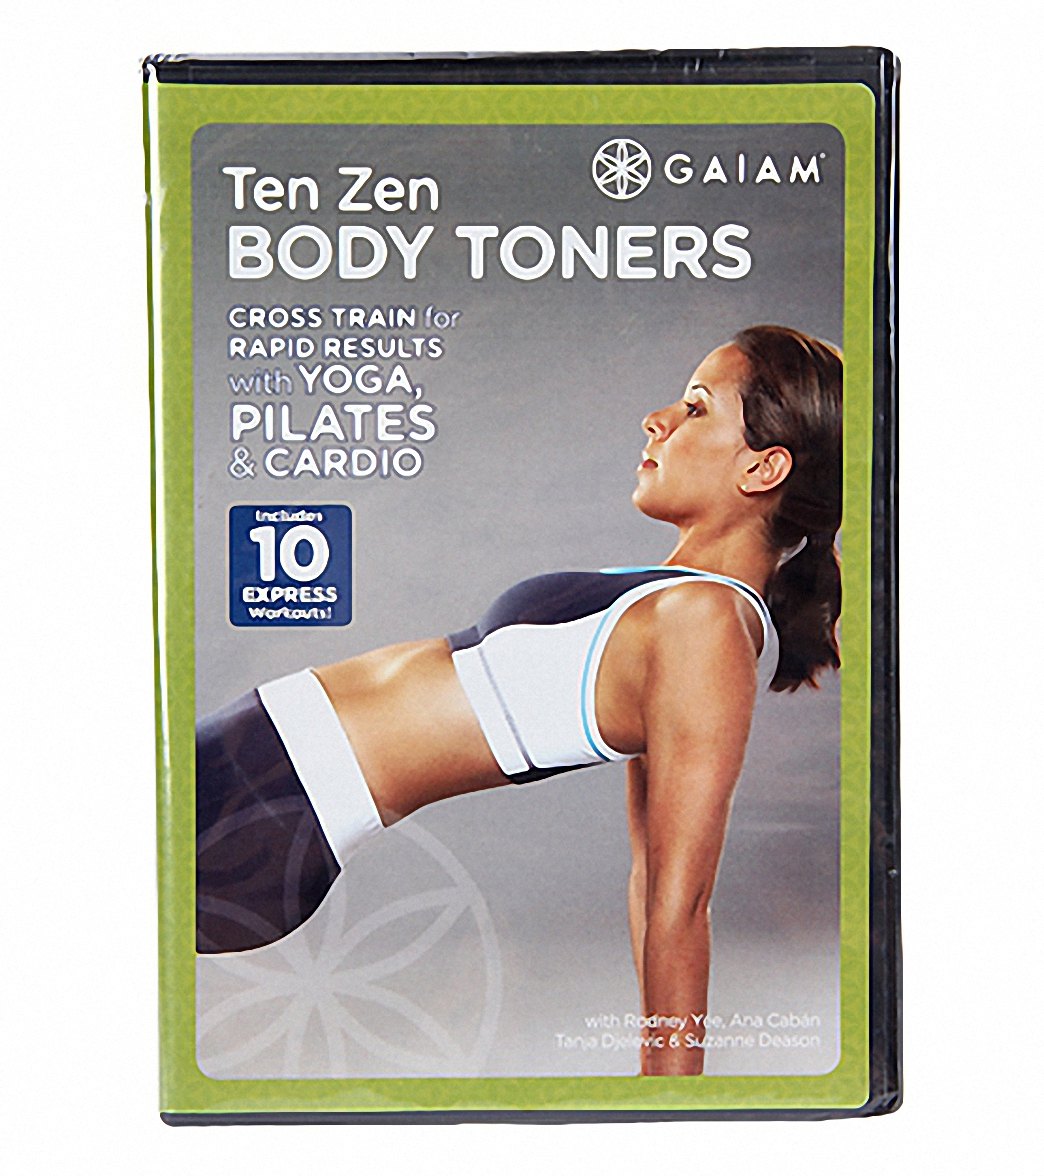 Gaiam Ten Zen Body Toners DVD at